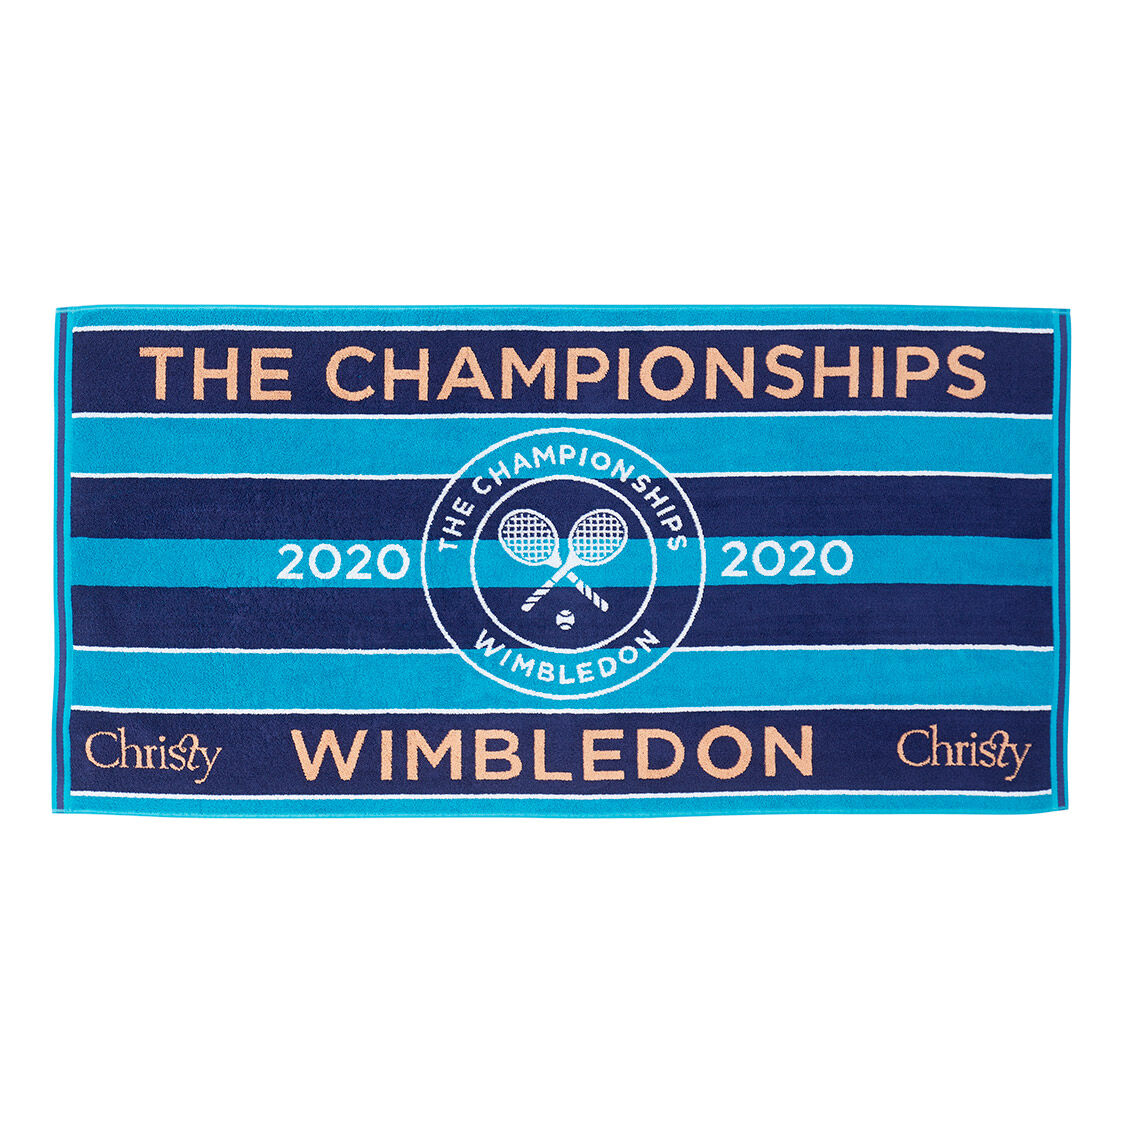 Wimbledon 2018 on Court Damen Tennis Handtuch von Christy Uk 132 Jahre Wimbledon 